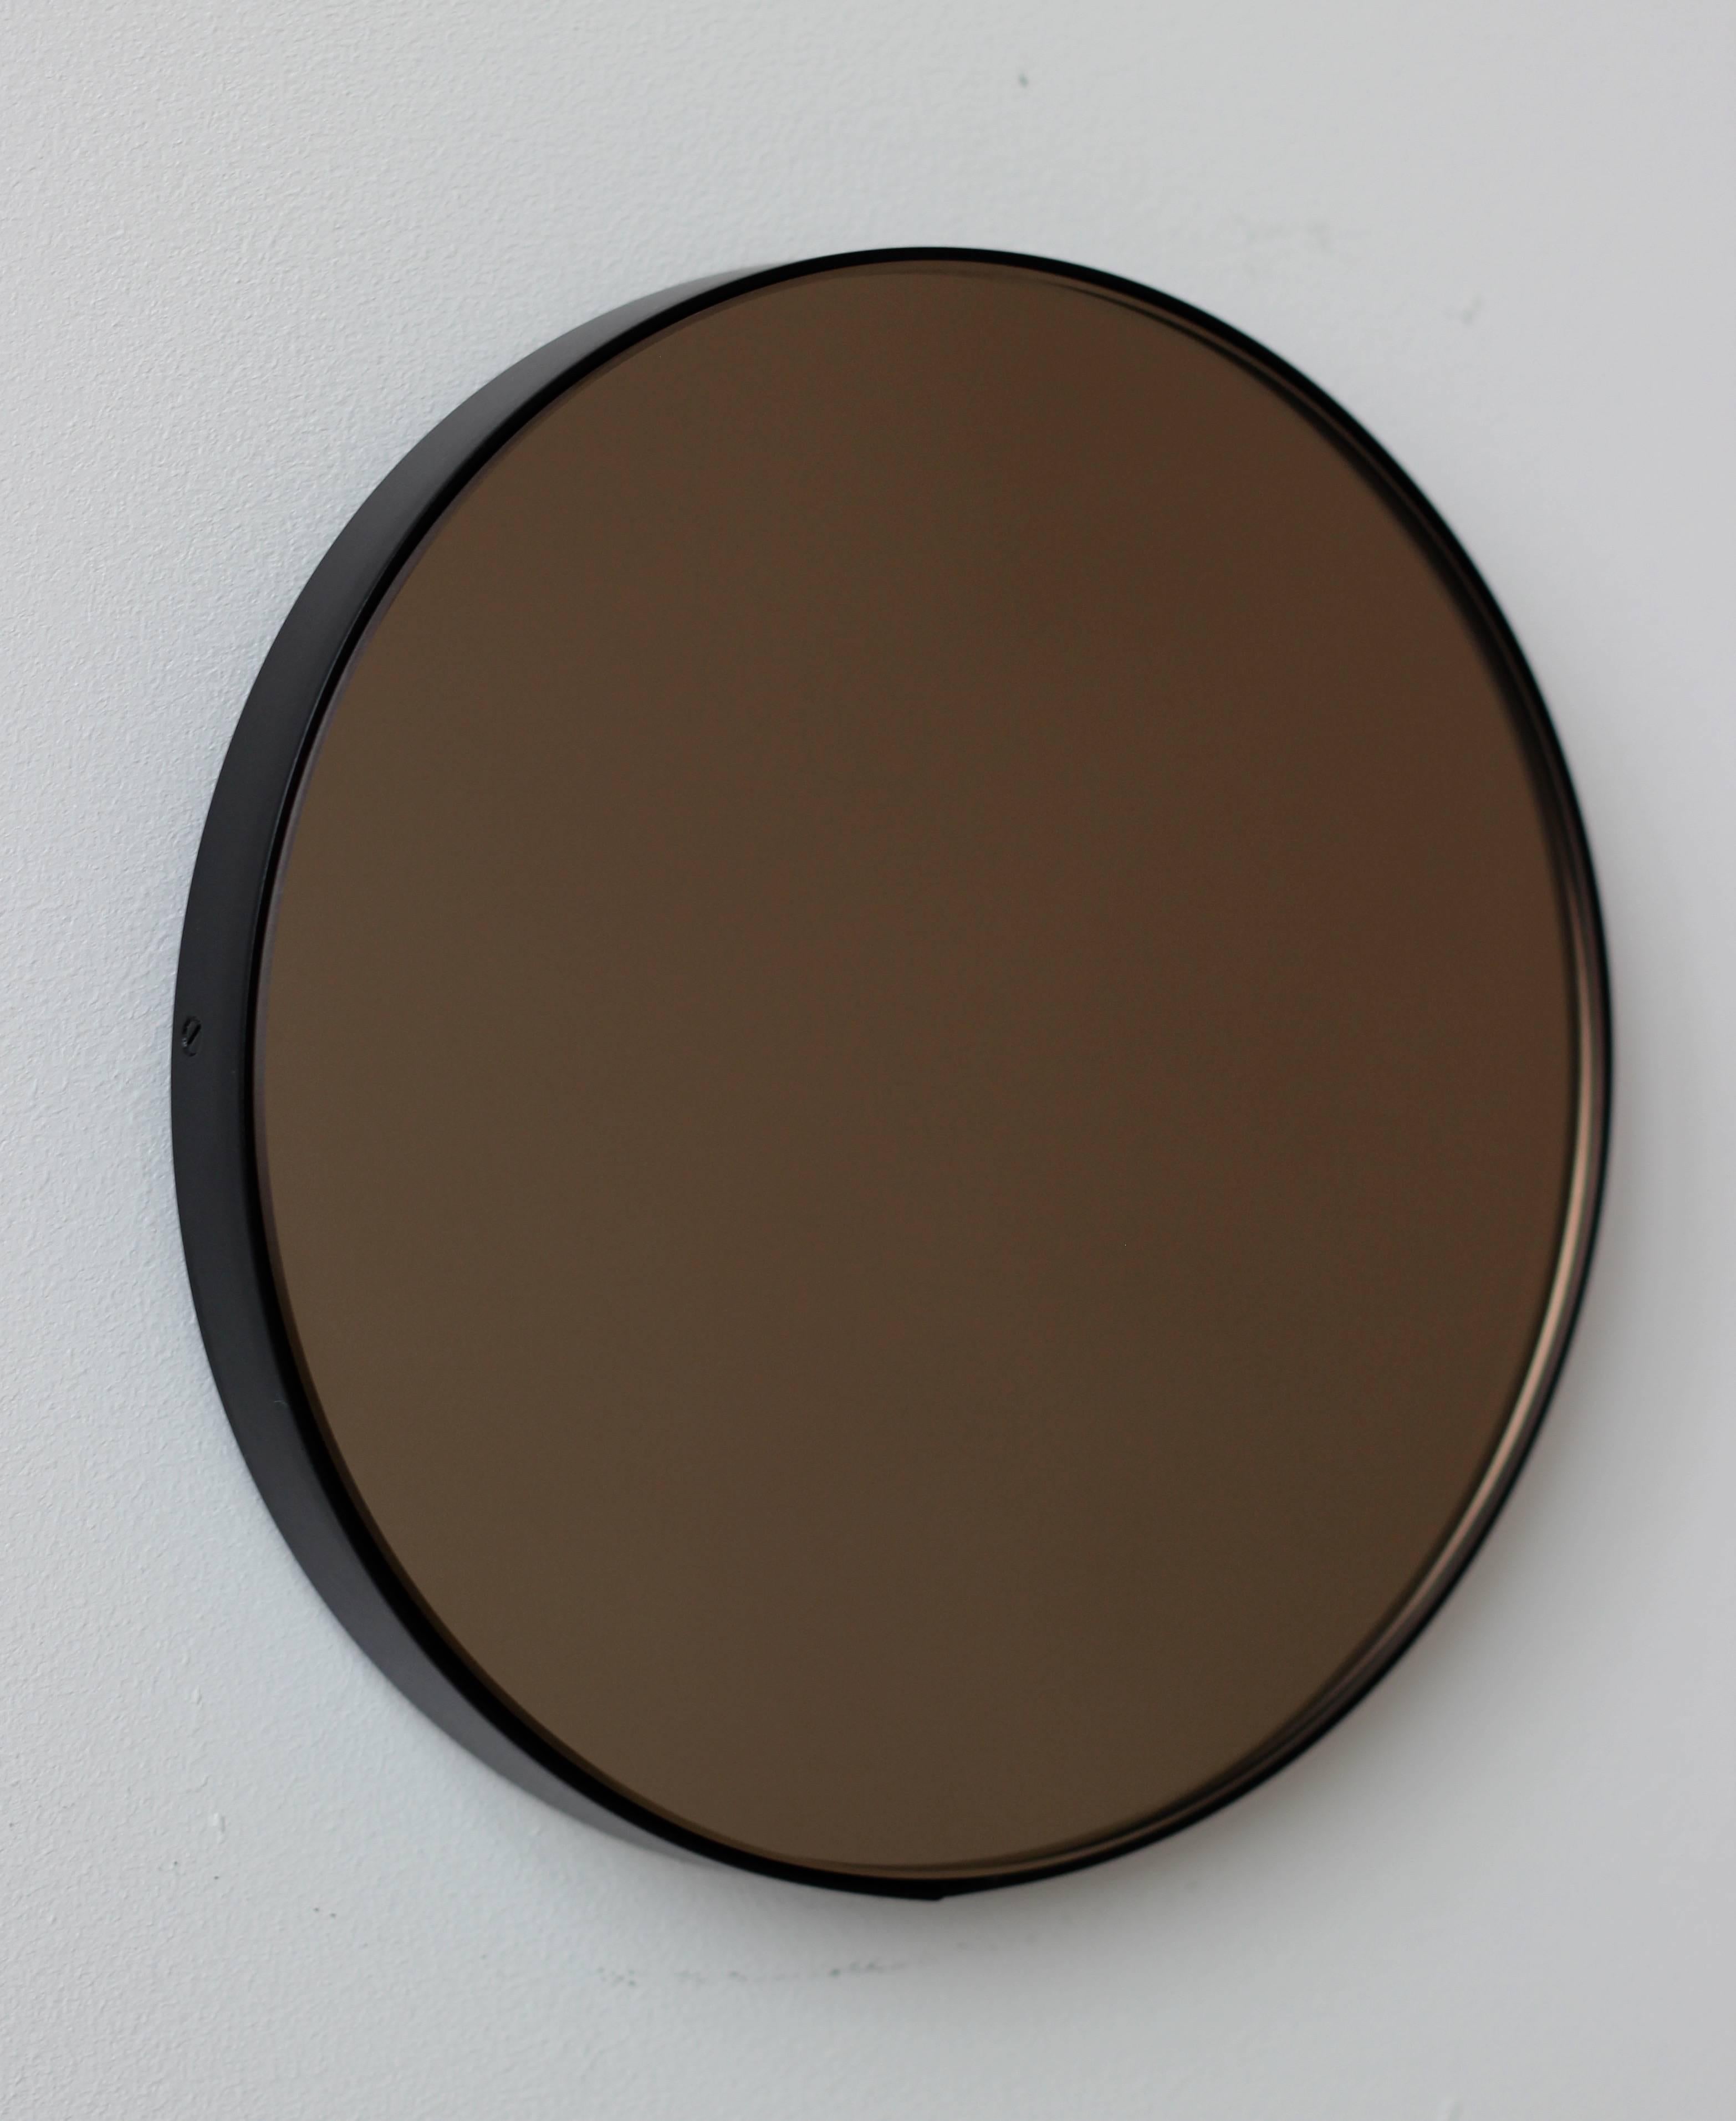 tinted grey mirror